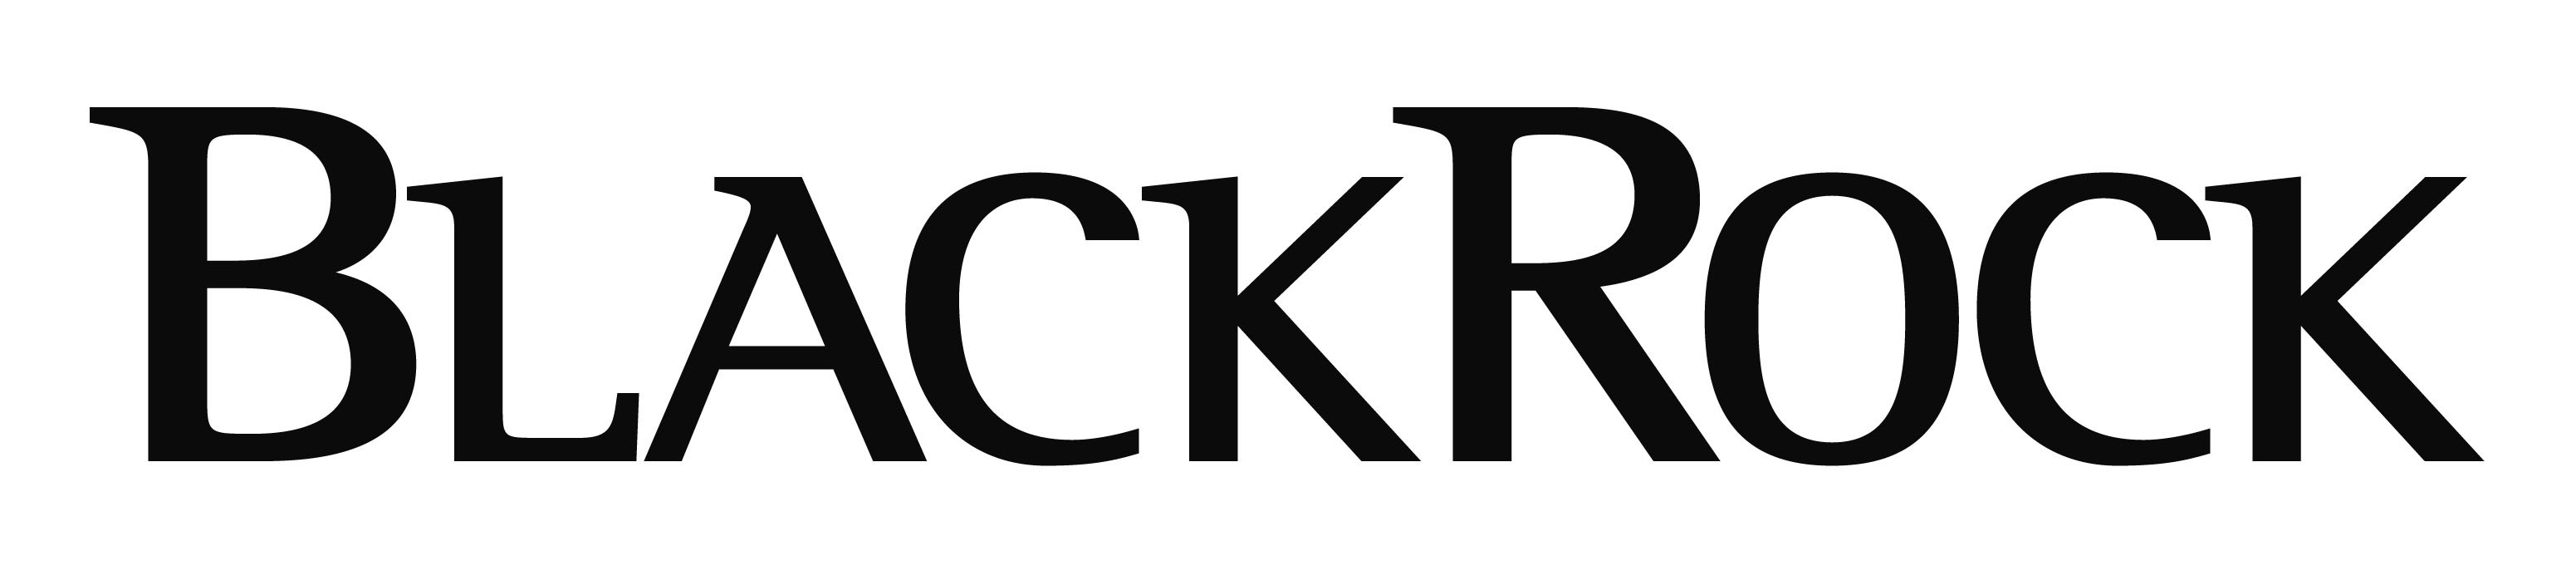 BlackRock TCP Capital Corp